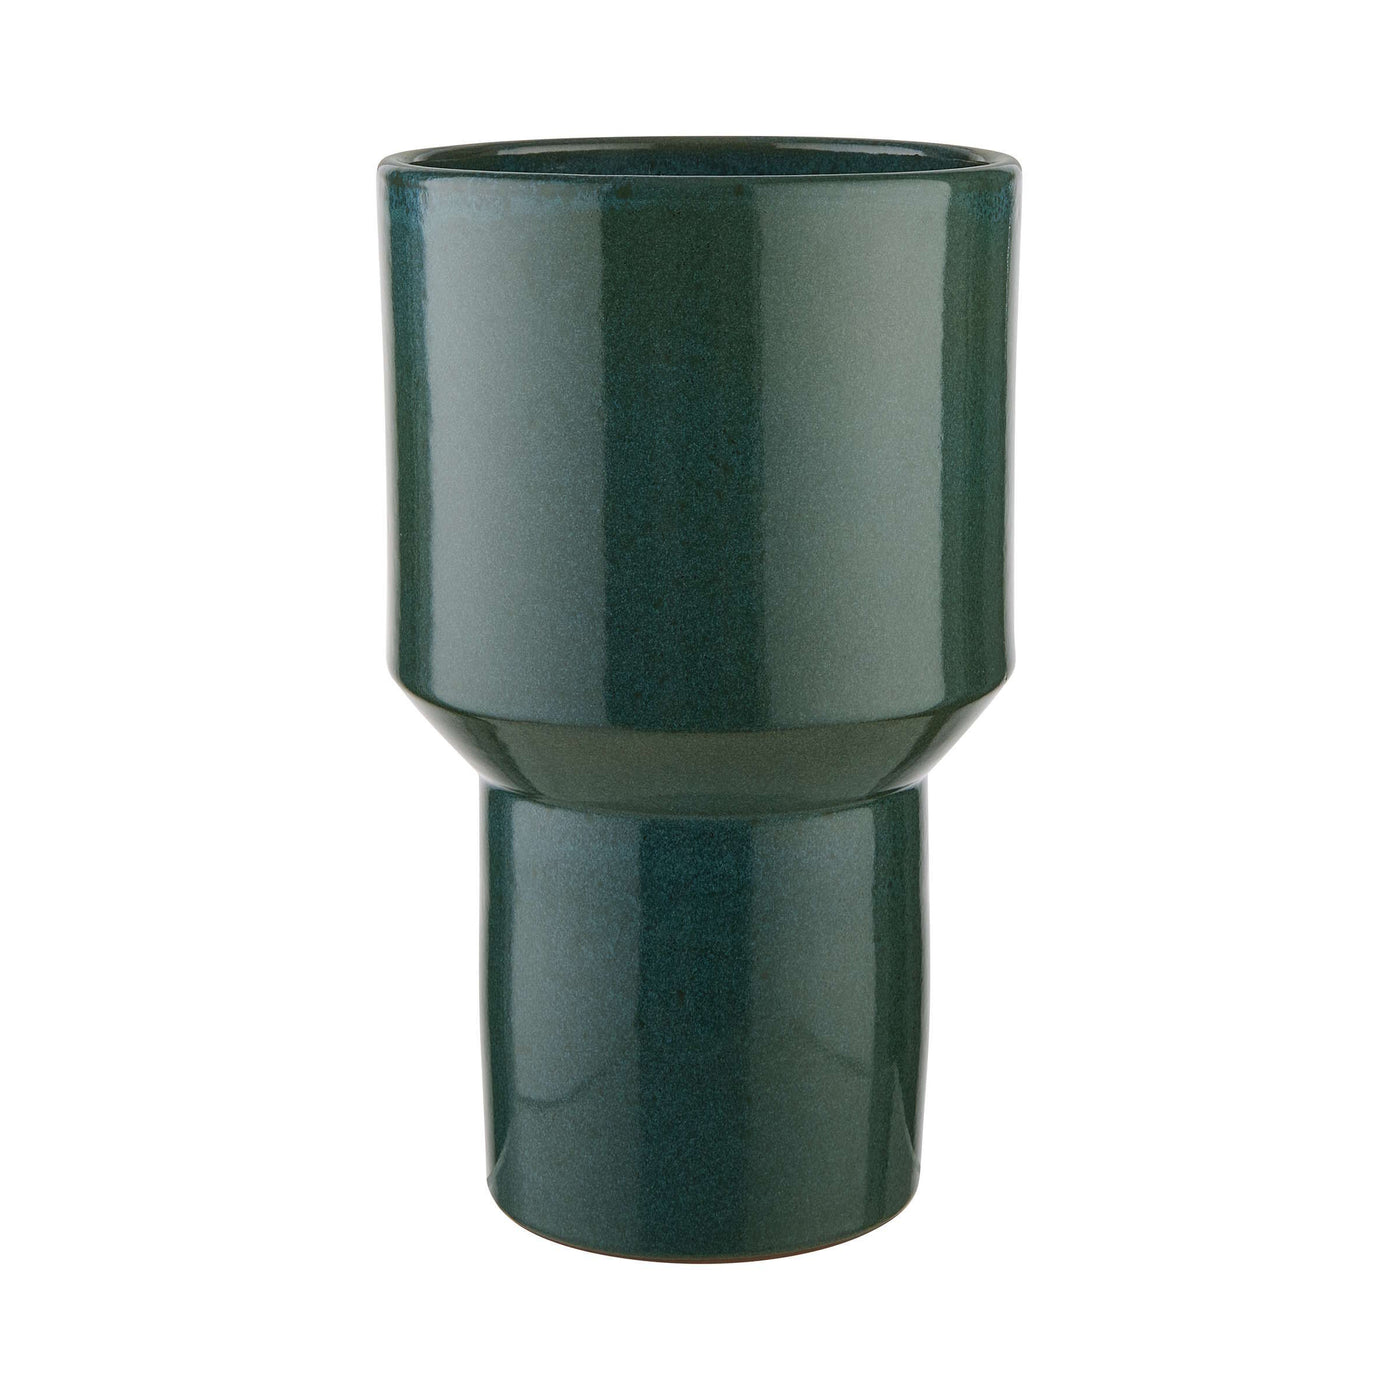 BOTANICAL ceramic vase 26,5cm, green